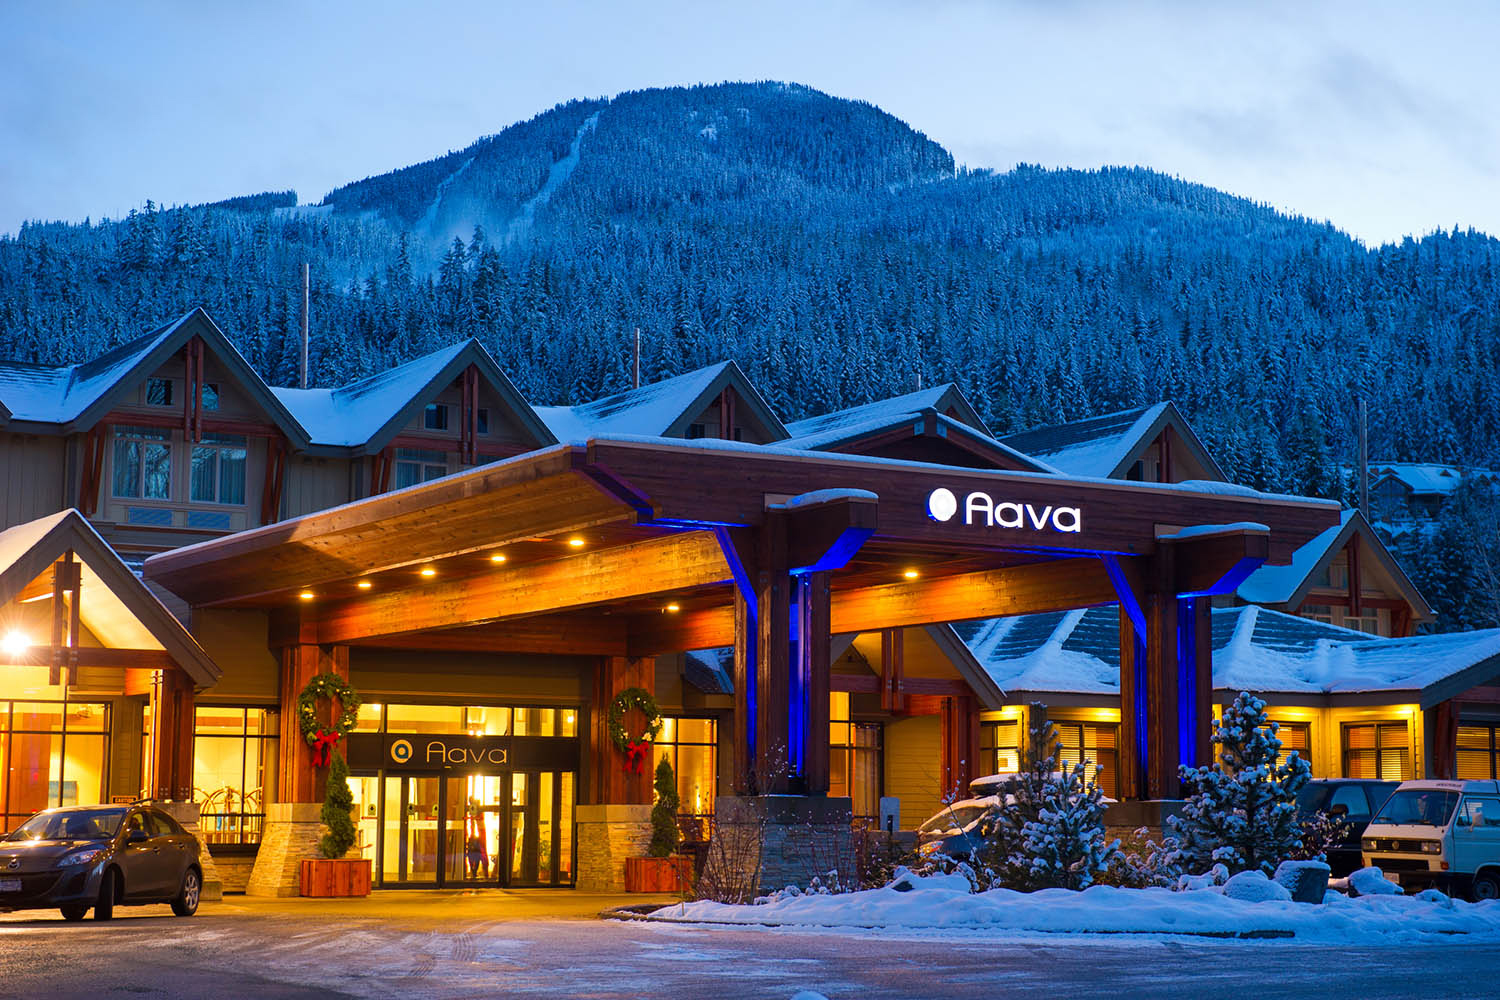 Aava hotel, Whistler, British Columbia, Canada